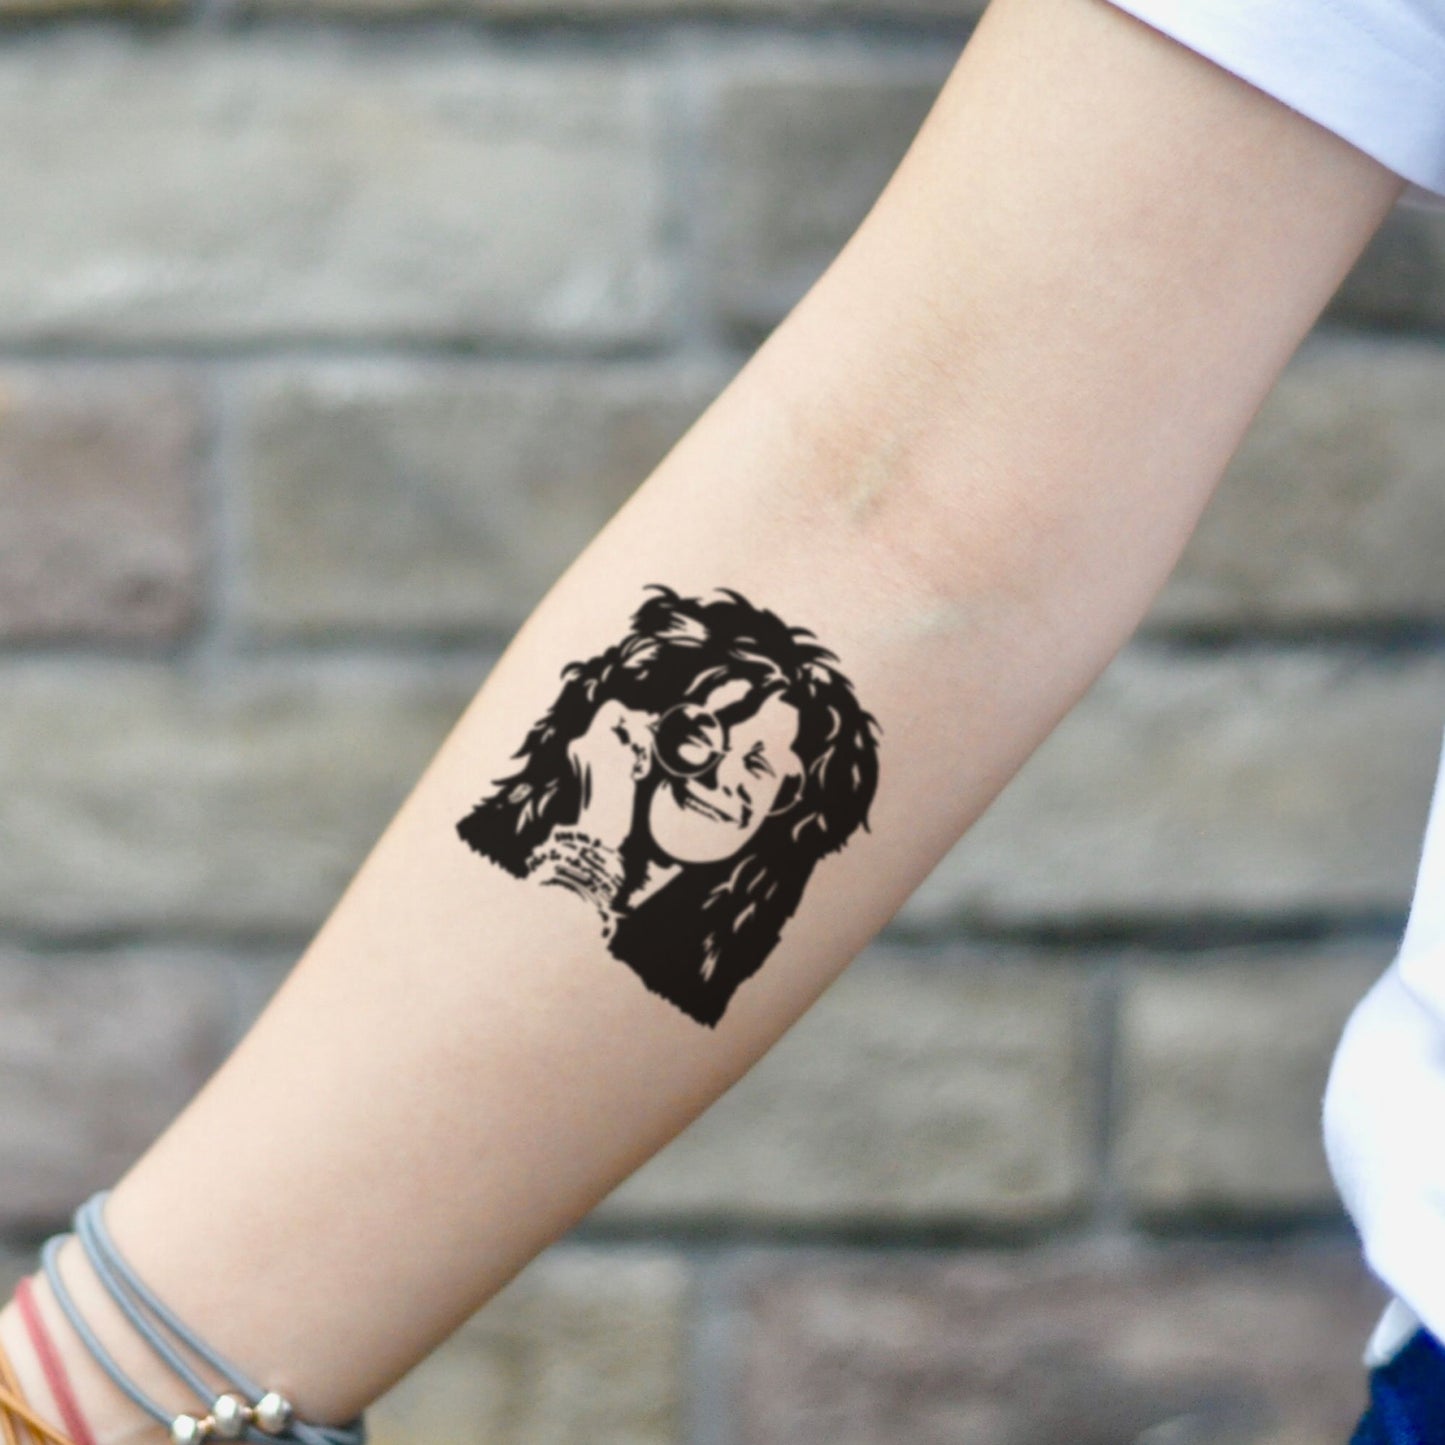 fake small janis joplin portrait temporary tattoo sticker design idea on inner arm